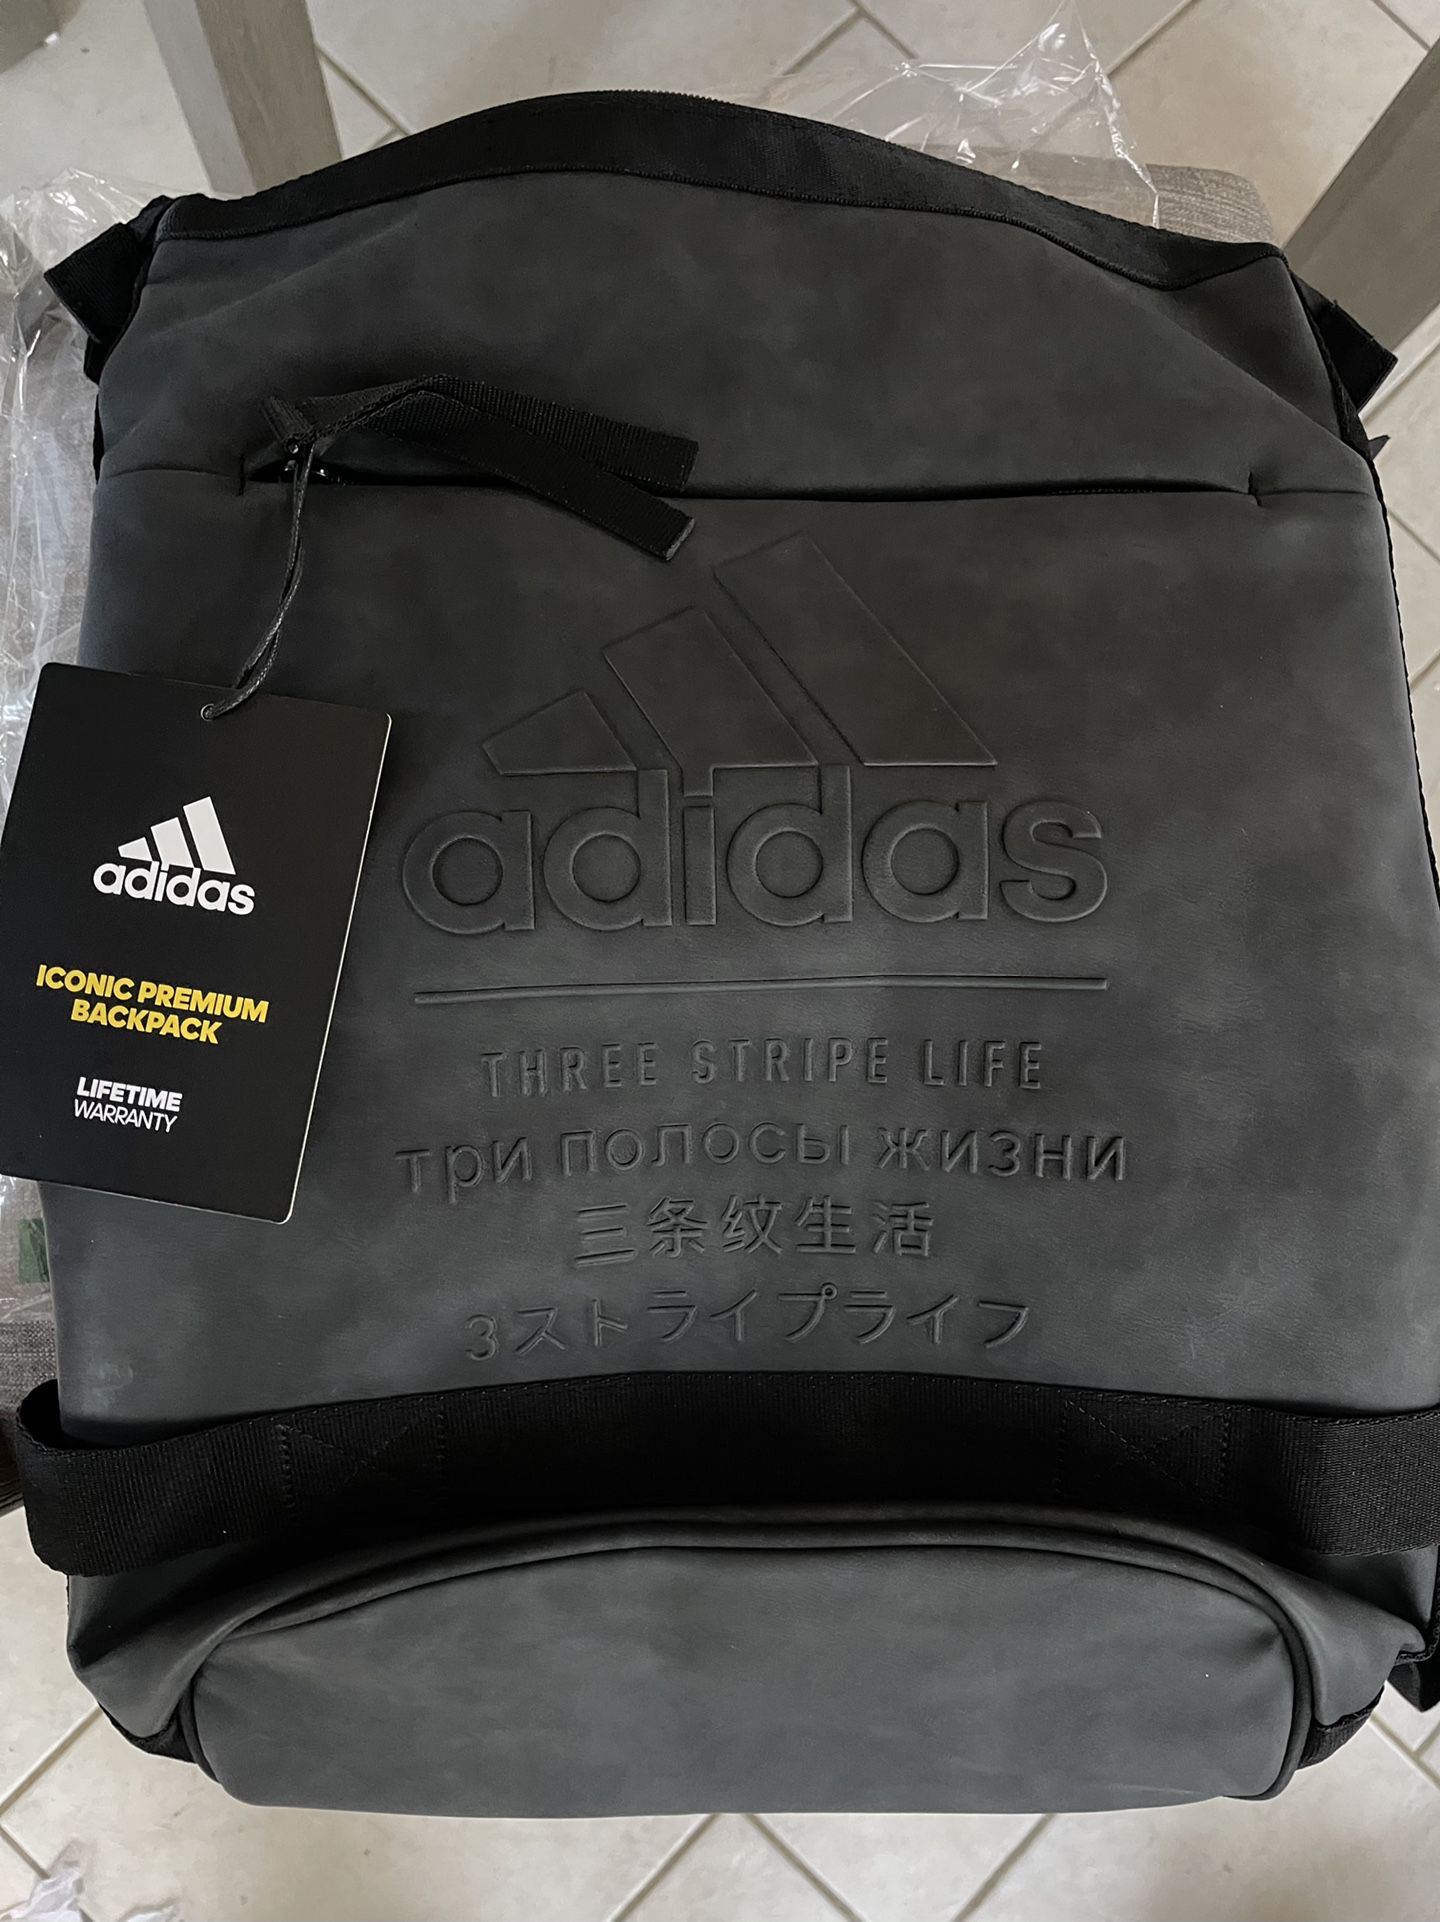 Adidas Iconic Premiem Backpack